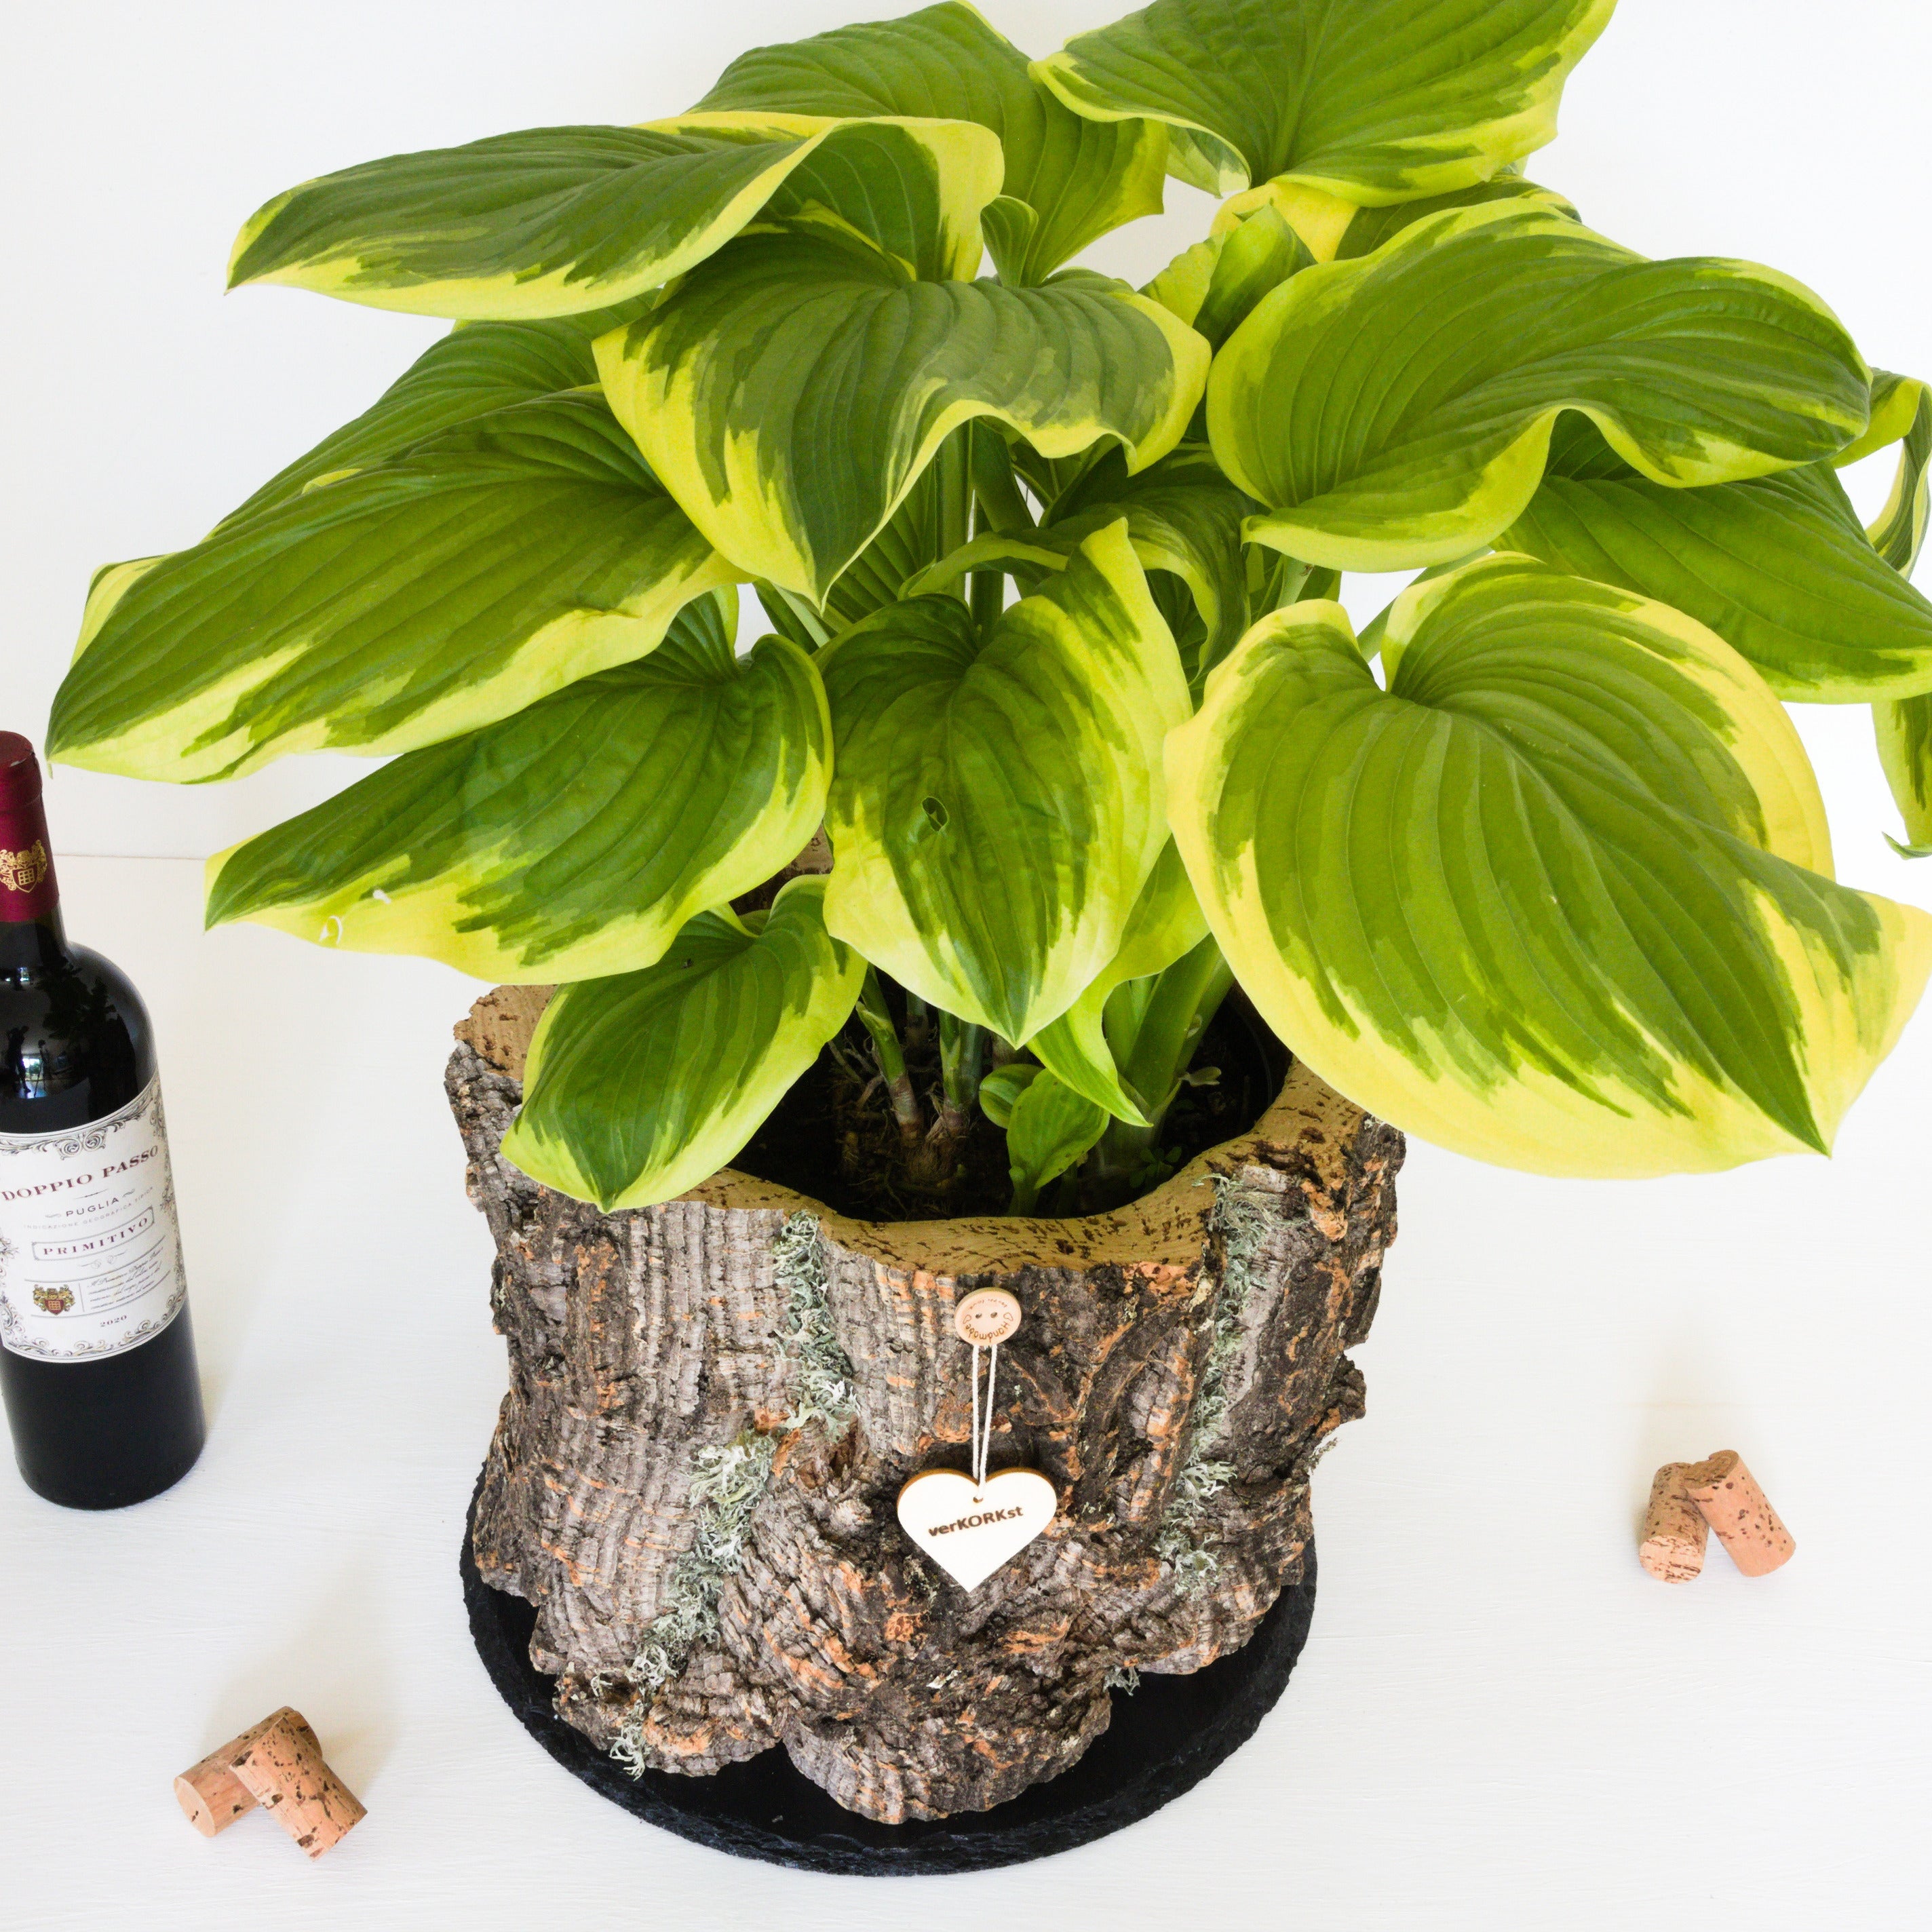 XL VERKORKst premium plant pot made of cork bark * rustic herb pot * vintage flower pot for kitchen, living room, garden and balcony